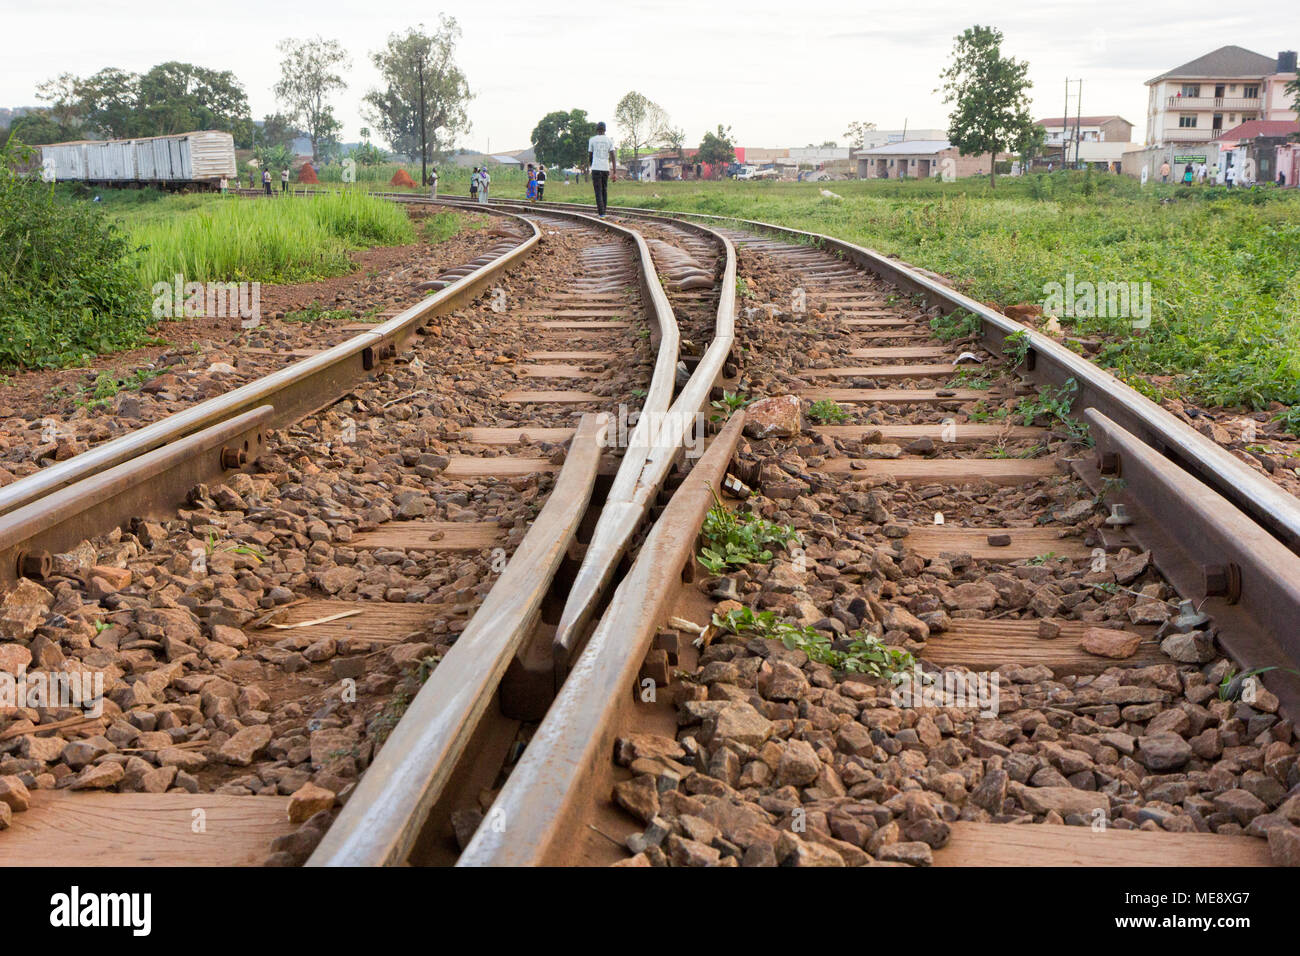 Lugazi, Uganda. 17 May 2017. A railway track in rural Uganda. A man walking along it. Stock Photo